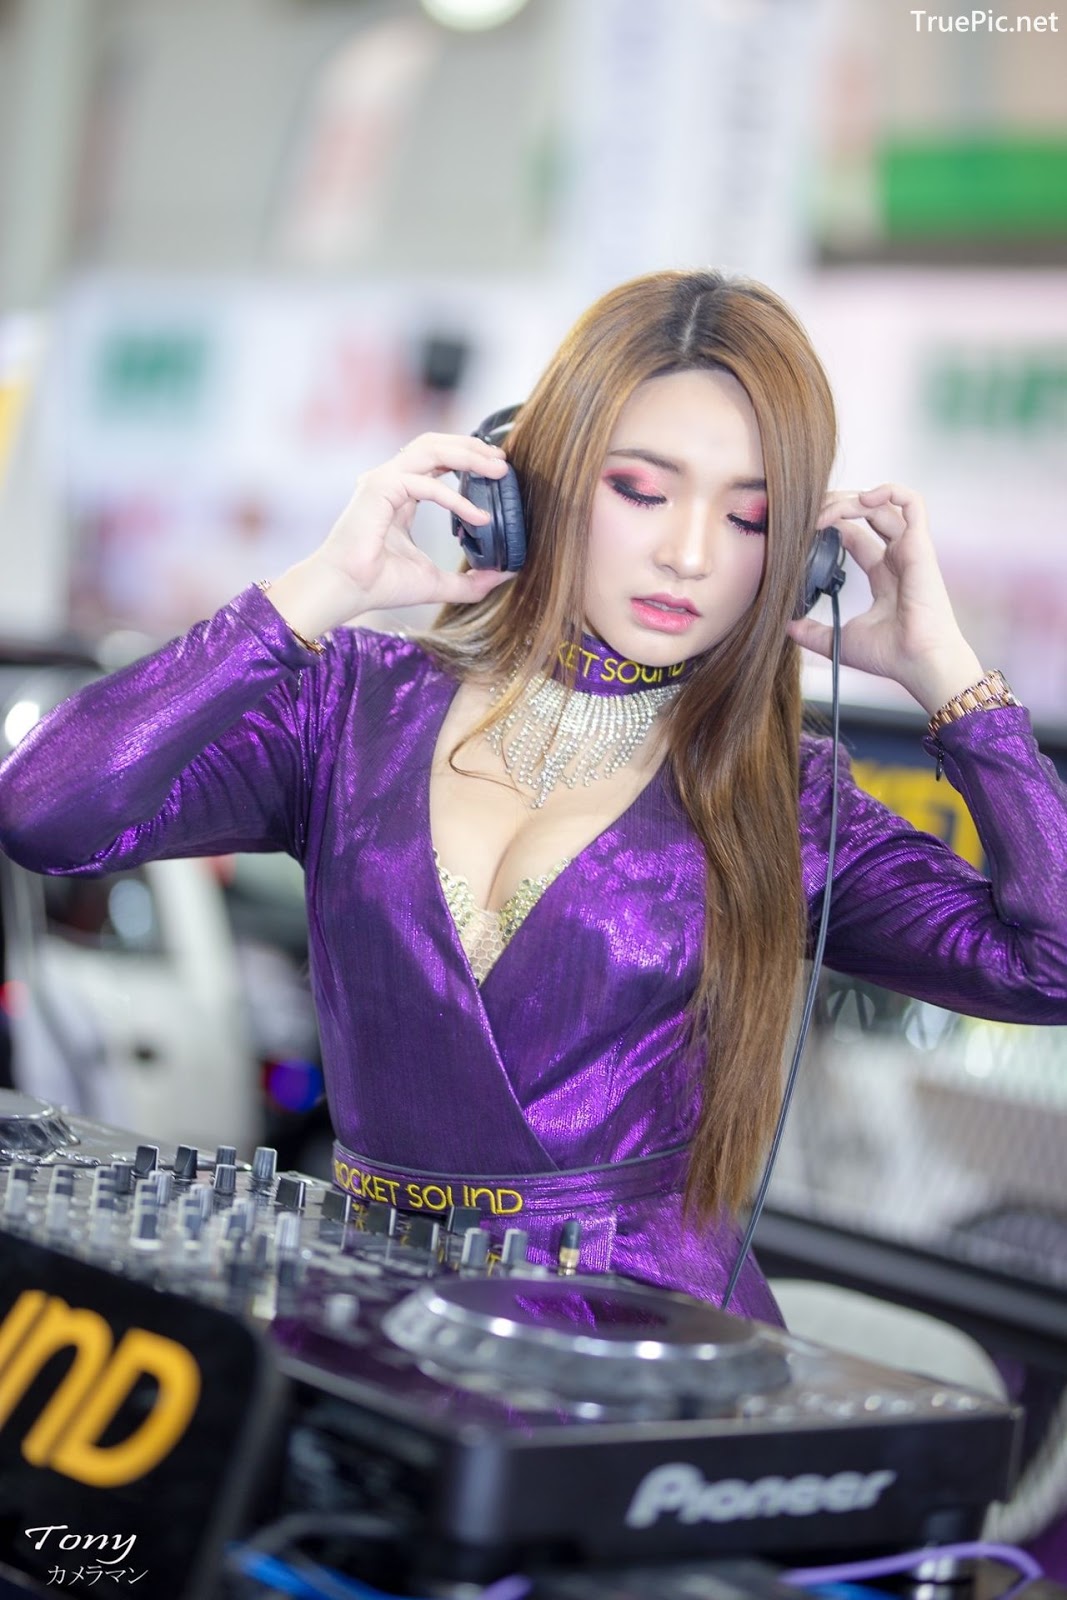 Image-Thailand-Hot-Model-Thai-Racing-Girl-At-Big-Motor-2018-TruePic.net- Picture-75